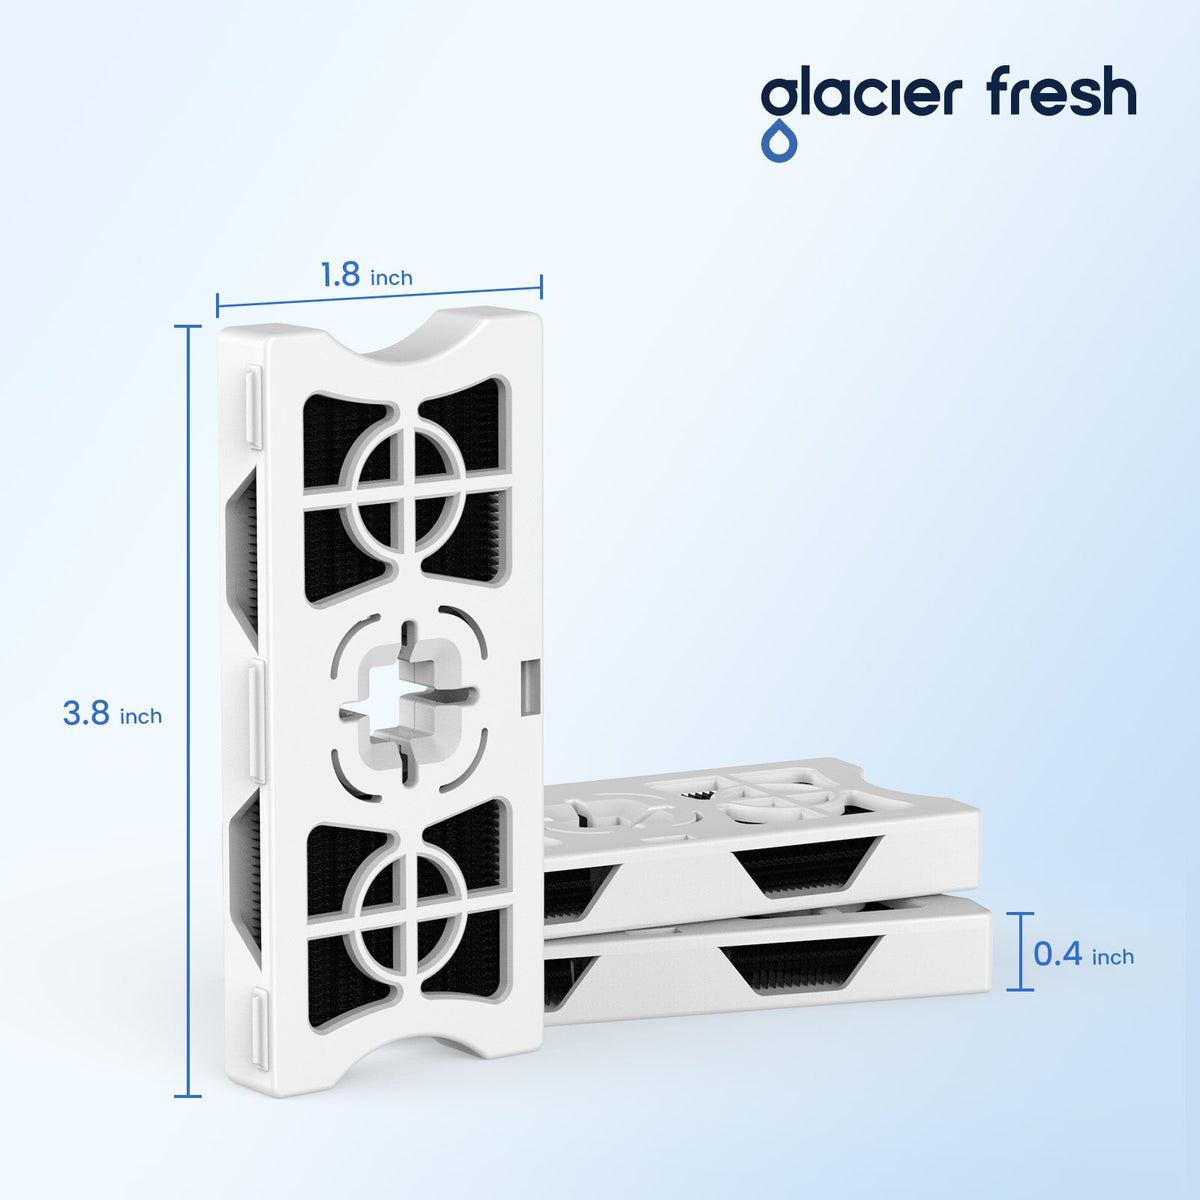 Glacier Fresh Compatible with Frigidaire FRGPAAF2 PureAir Air Filter, FRFC2323AS, FRFC232LAF, FRFC233LAF, FRFG2323AF, FRFN2823AS